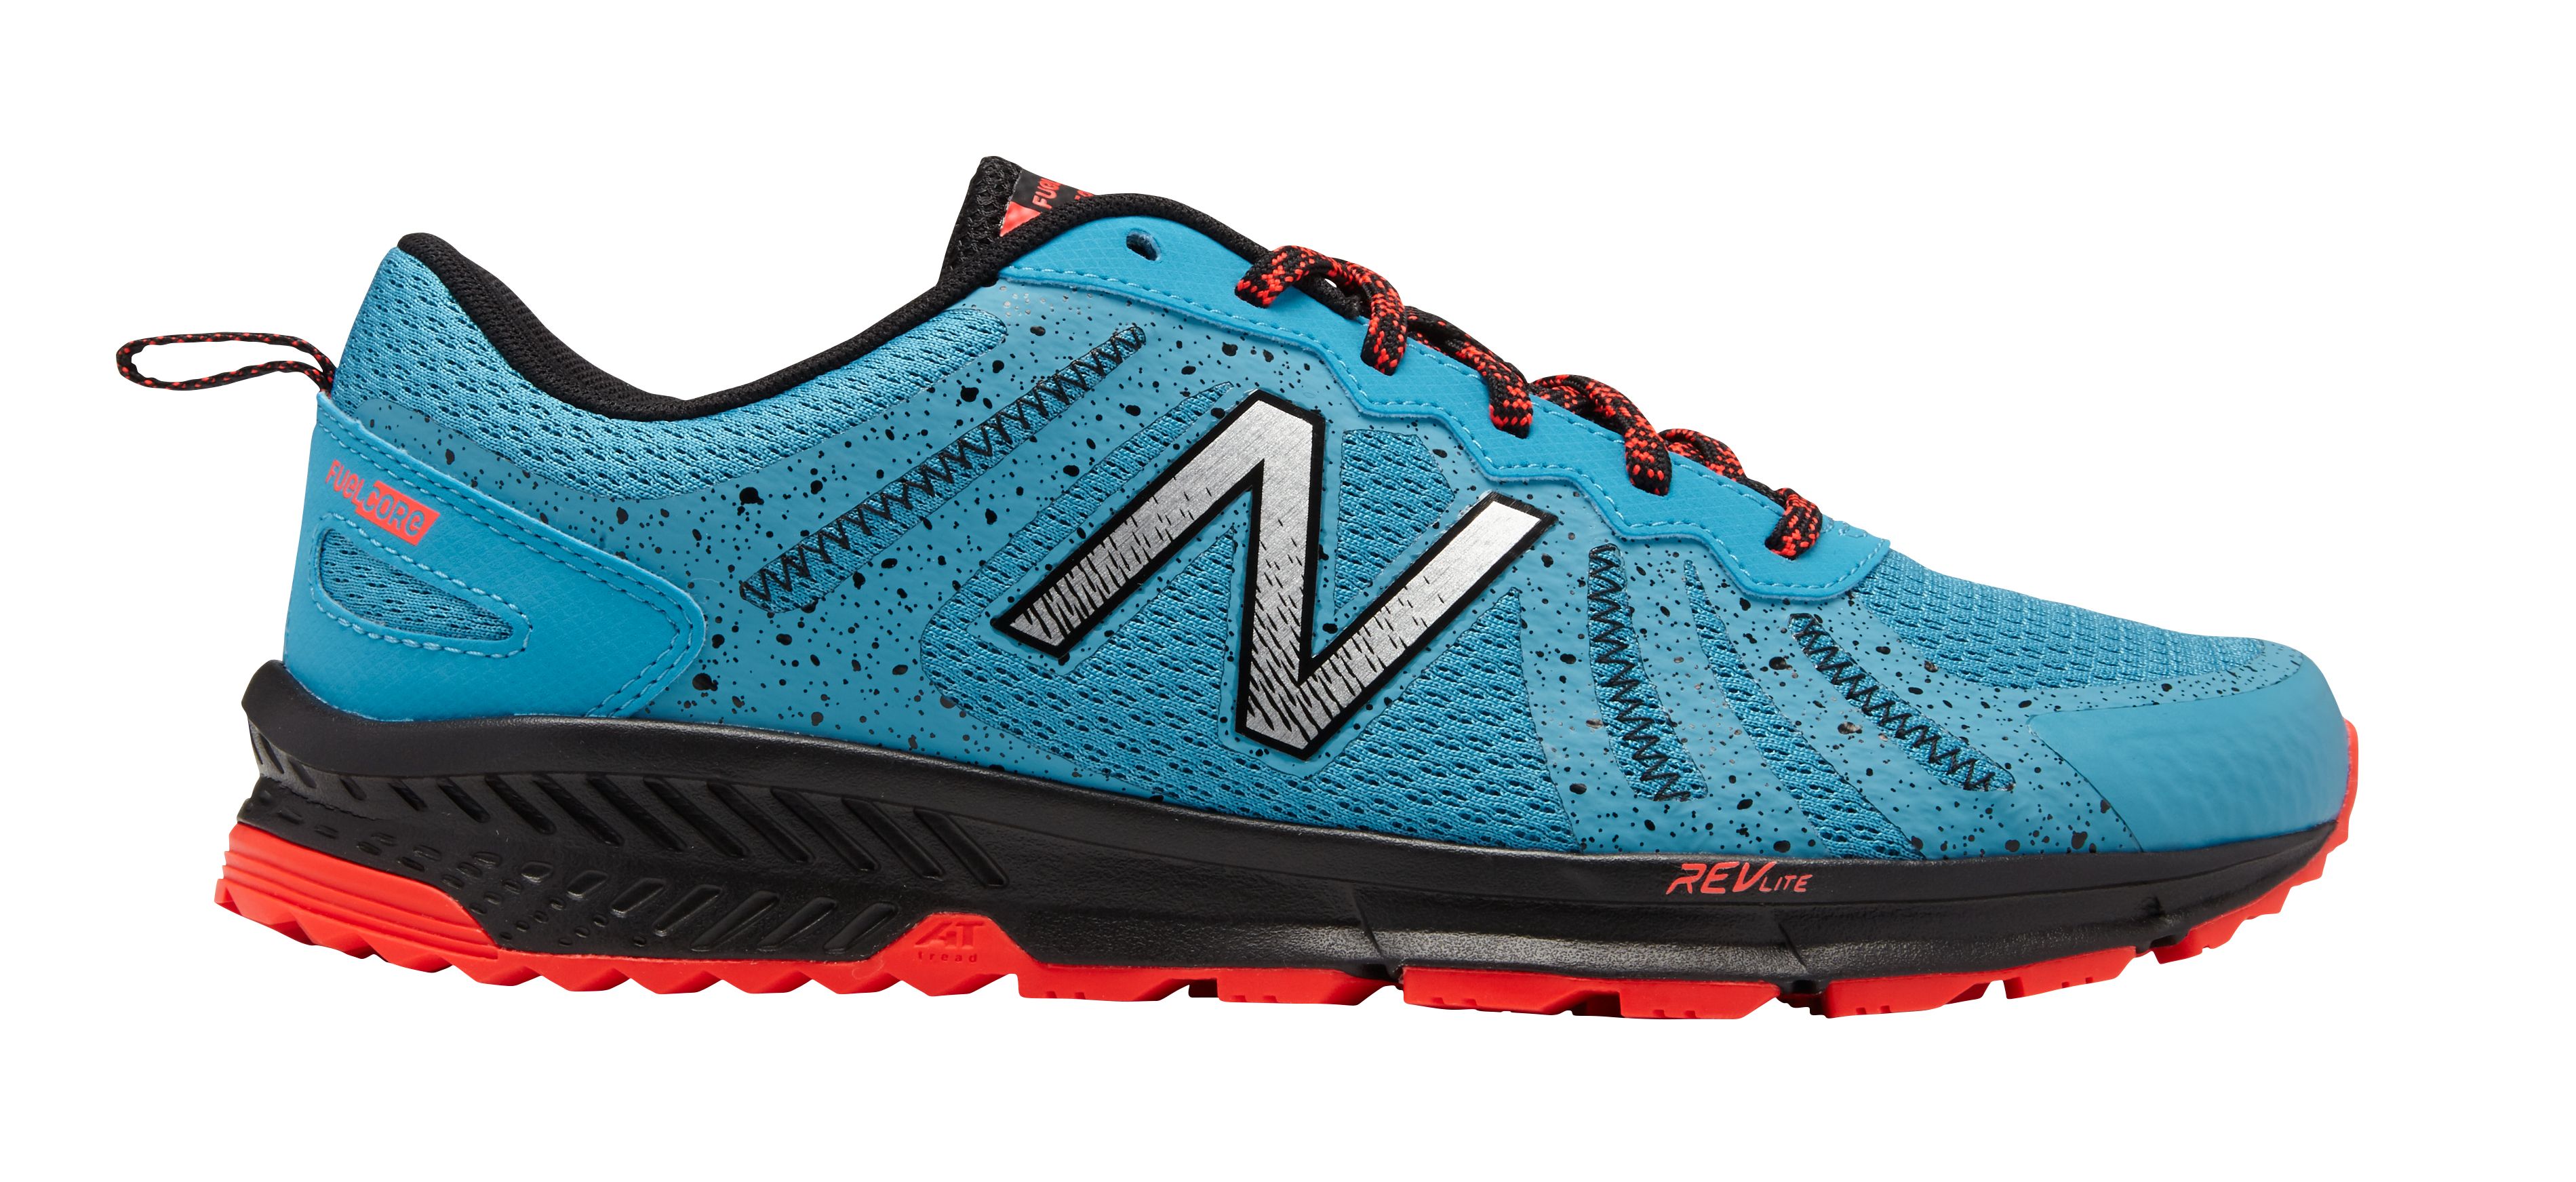 variable Empuje hacia abajo apenas Fingerhut - New Balance Men's Trail 590v4 Running Shoe